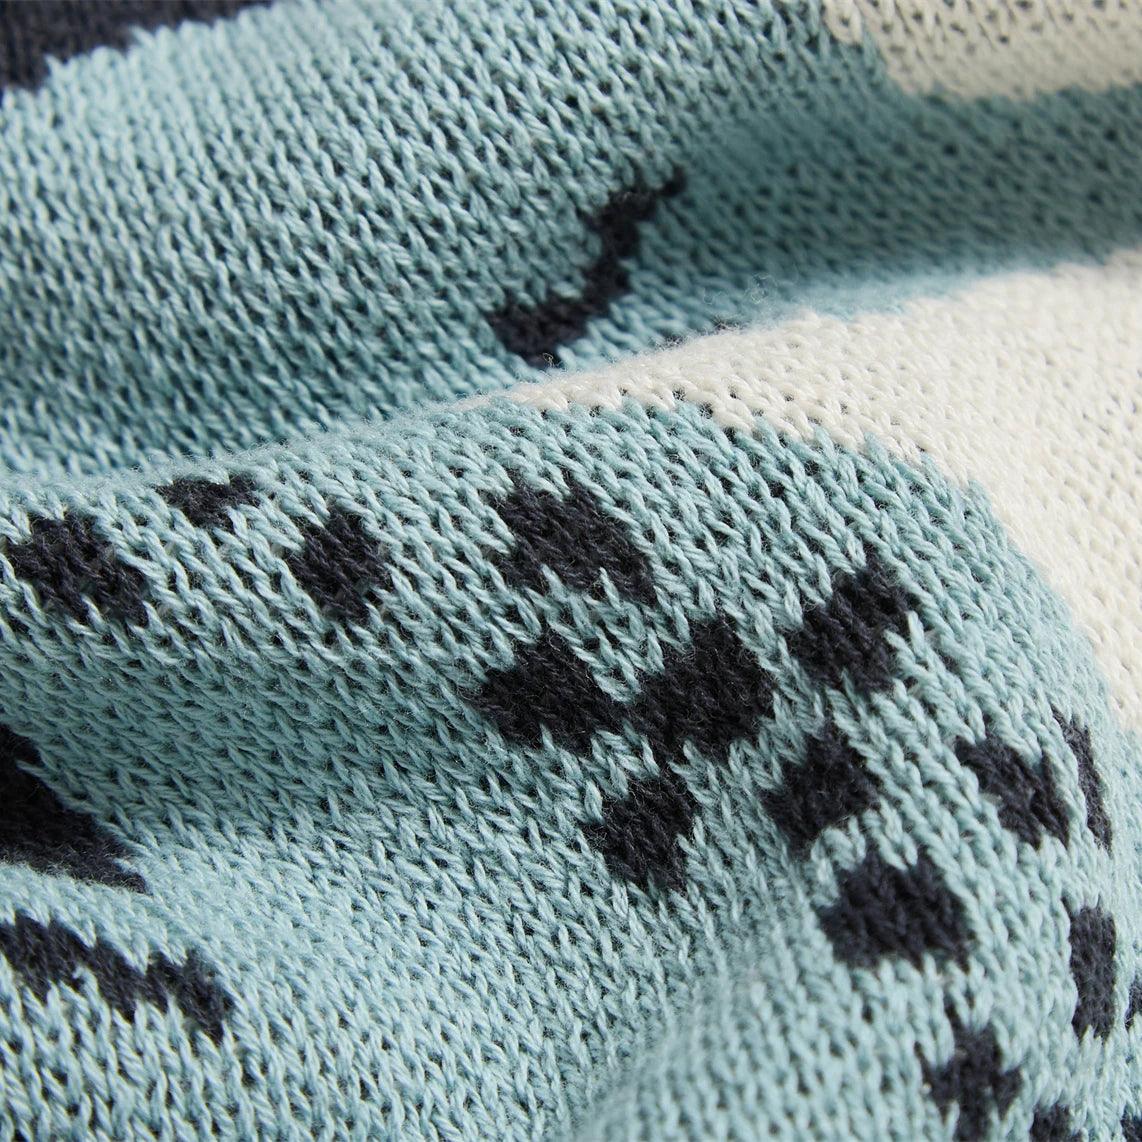 Seahorse Serenity Cotton Throw Blanket - Fluffyslip